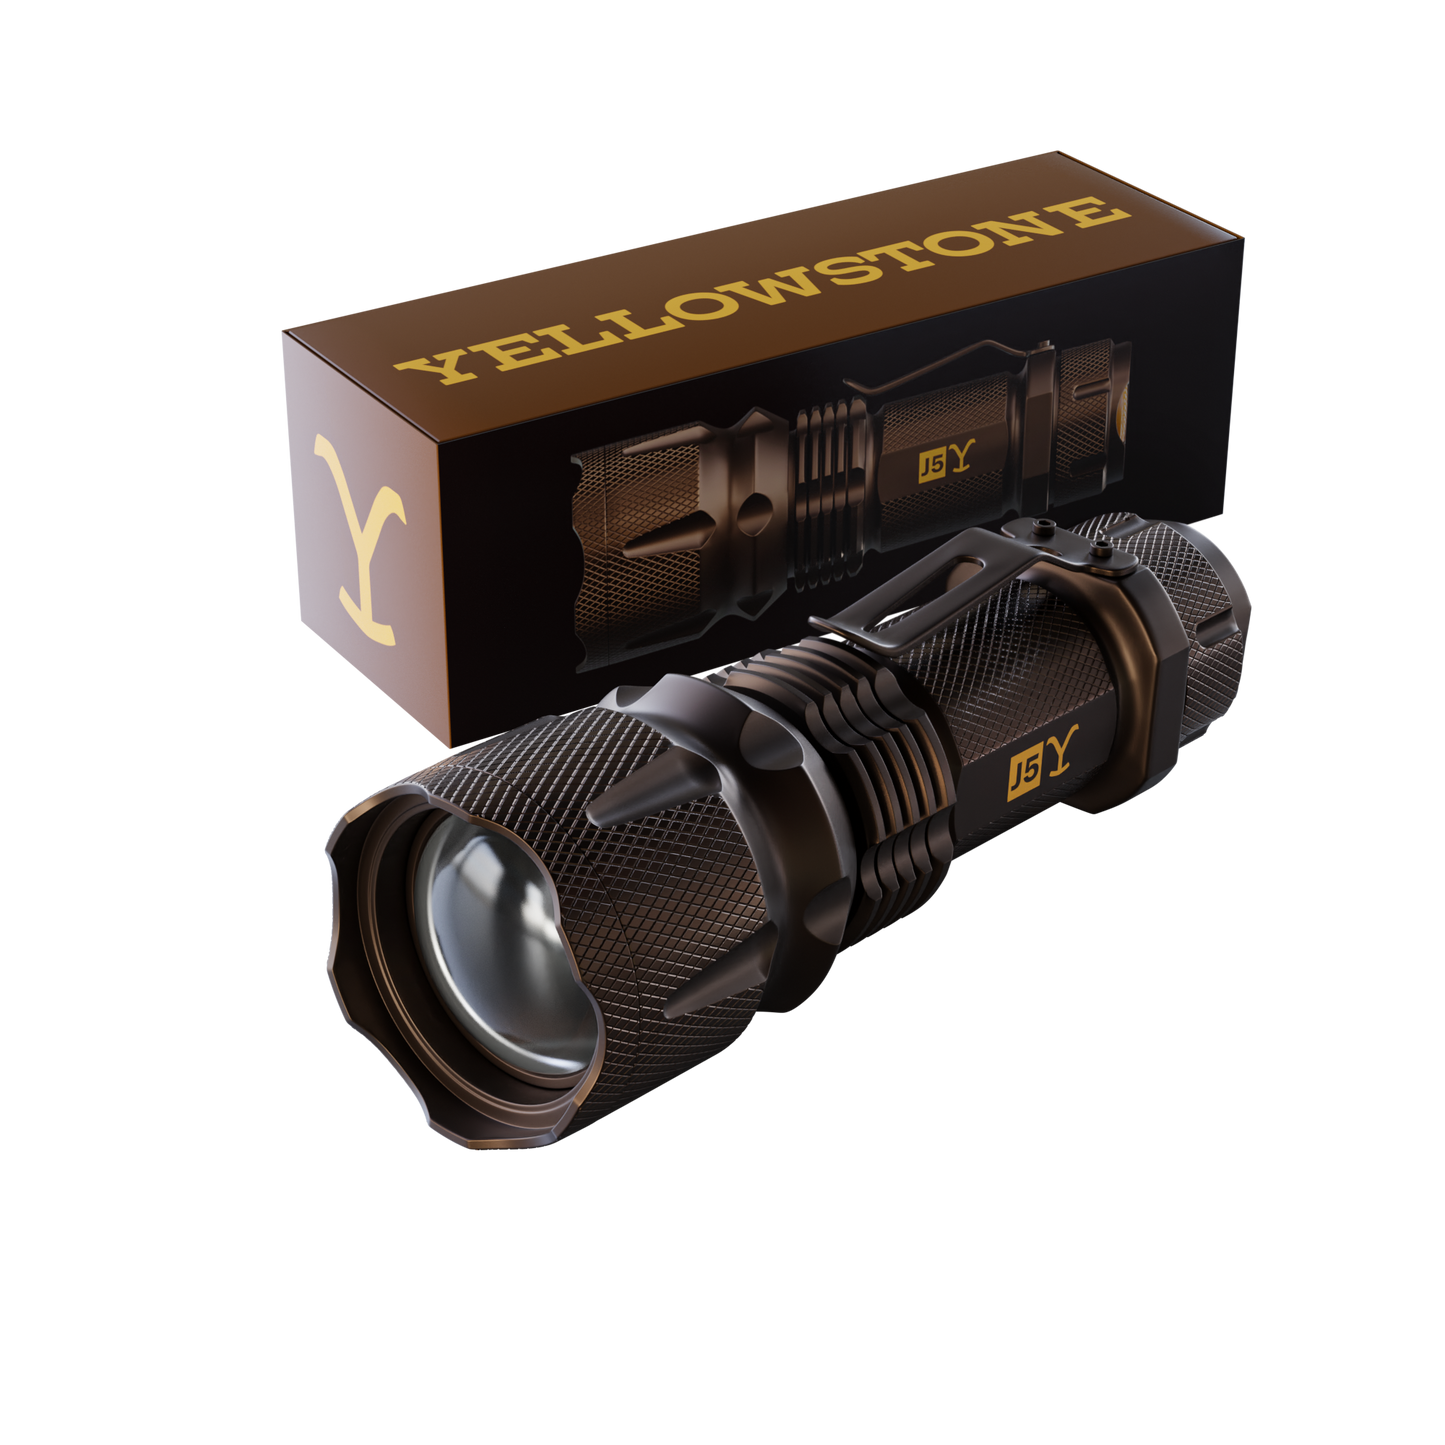 Yellowstone Edition J5 Tactical Hyper V Flashlight